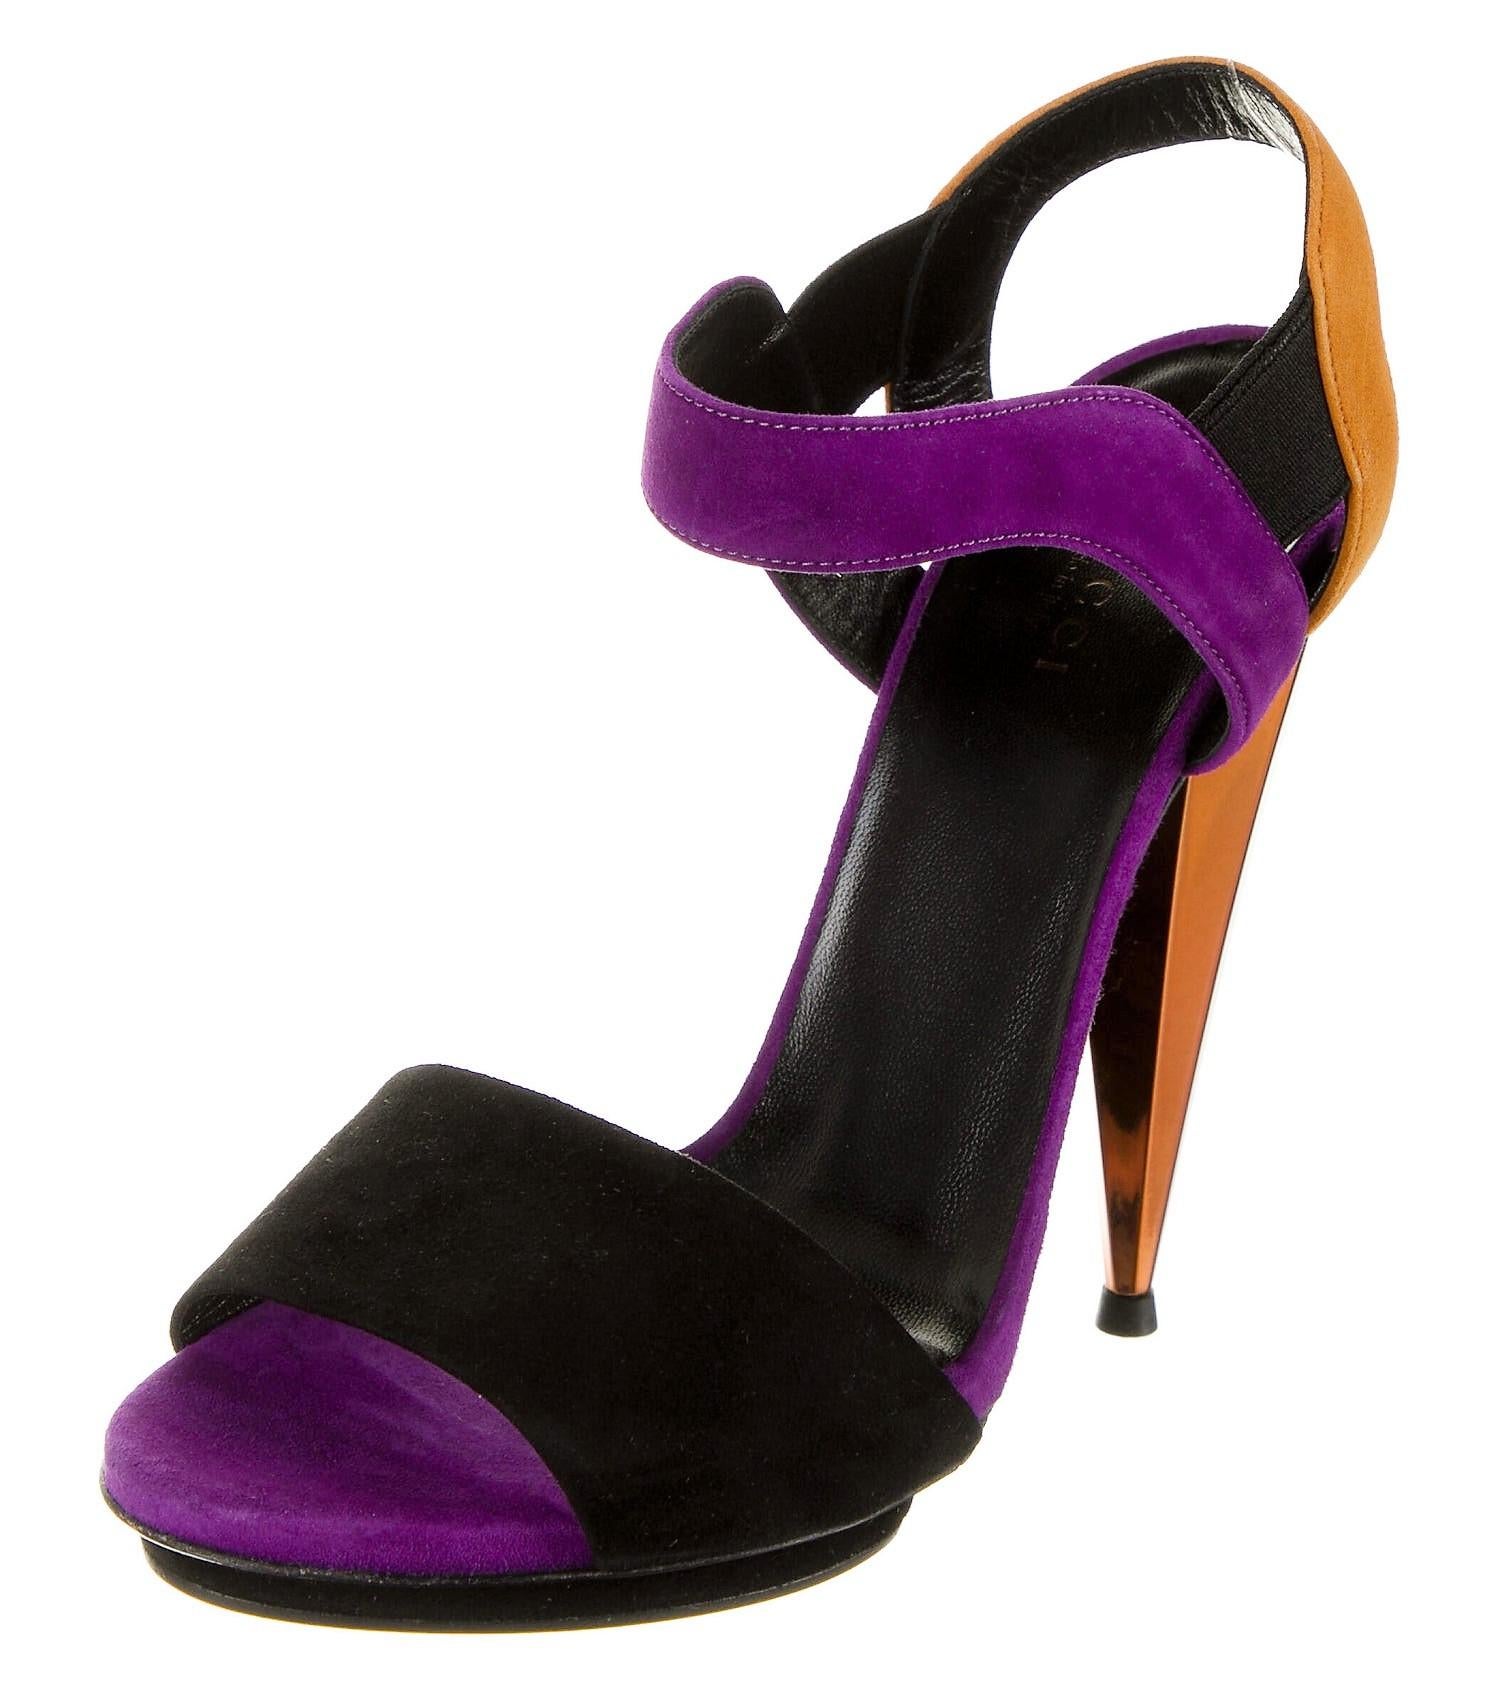 New Gucci Ad Runway 2014 Purple Orange Suede Mirrored Pump Heels Sz 39 For Sale 1